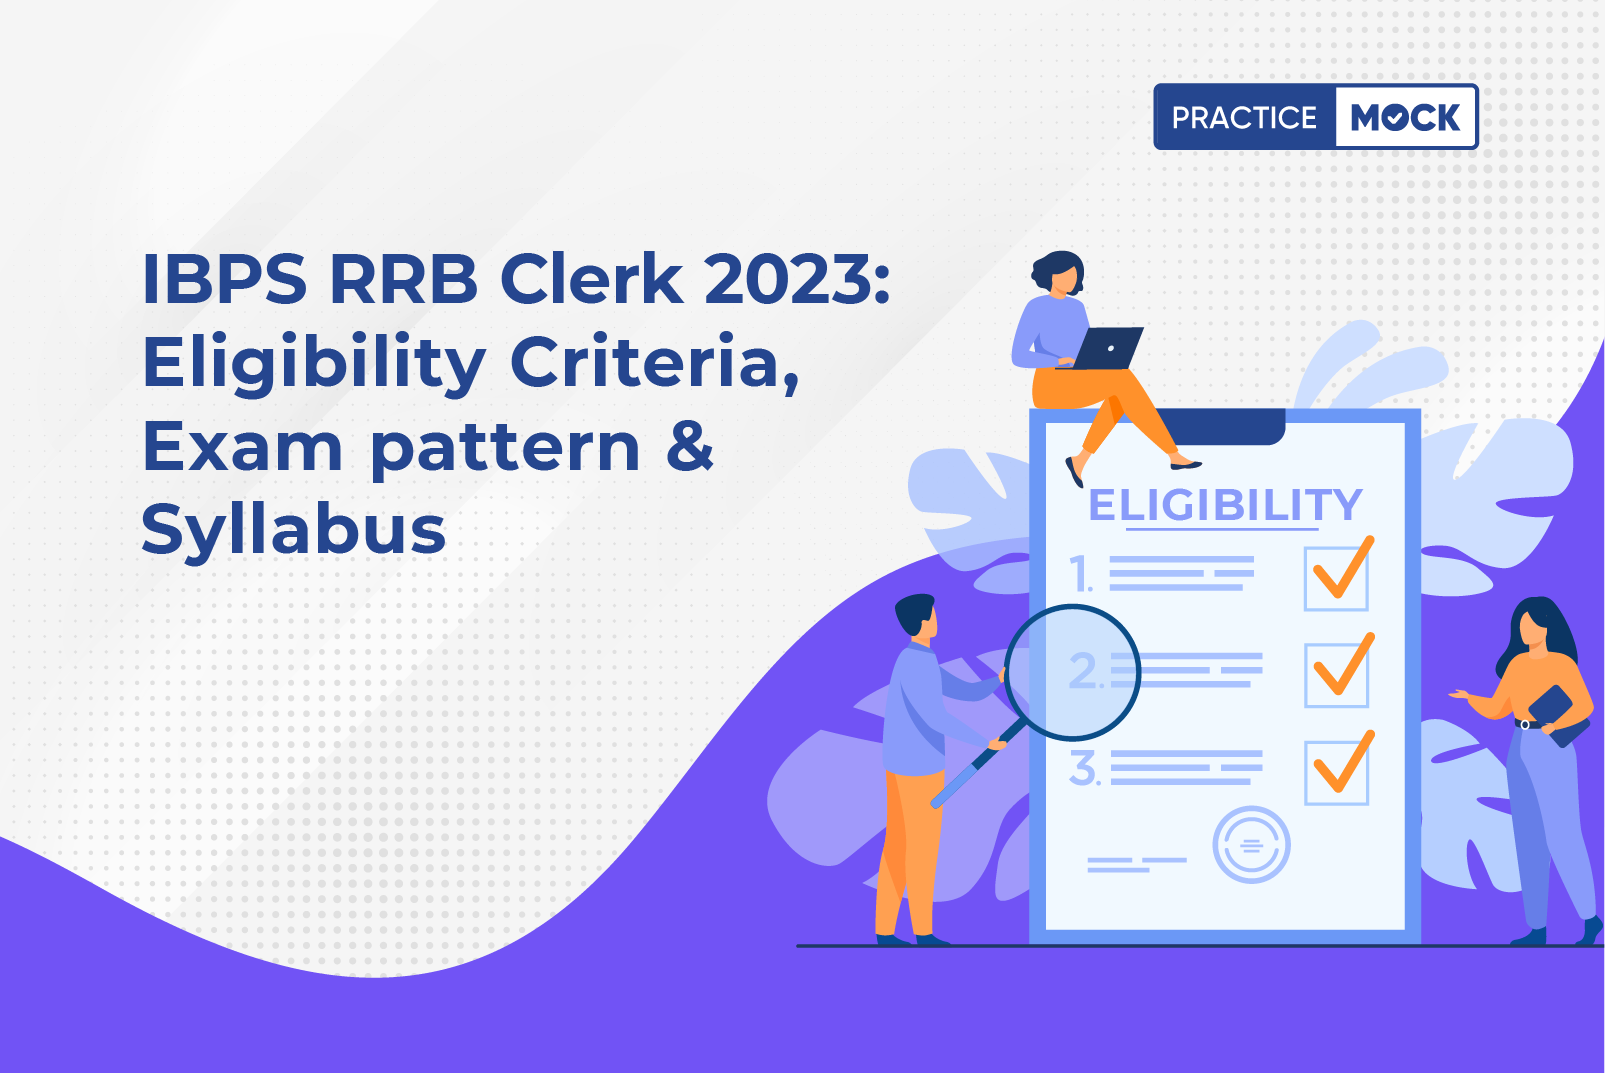 IBPS RRB Clerk Exam Pattern Eligibility Criteria PracticeMock